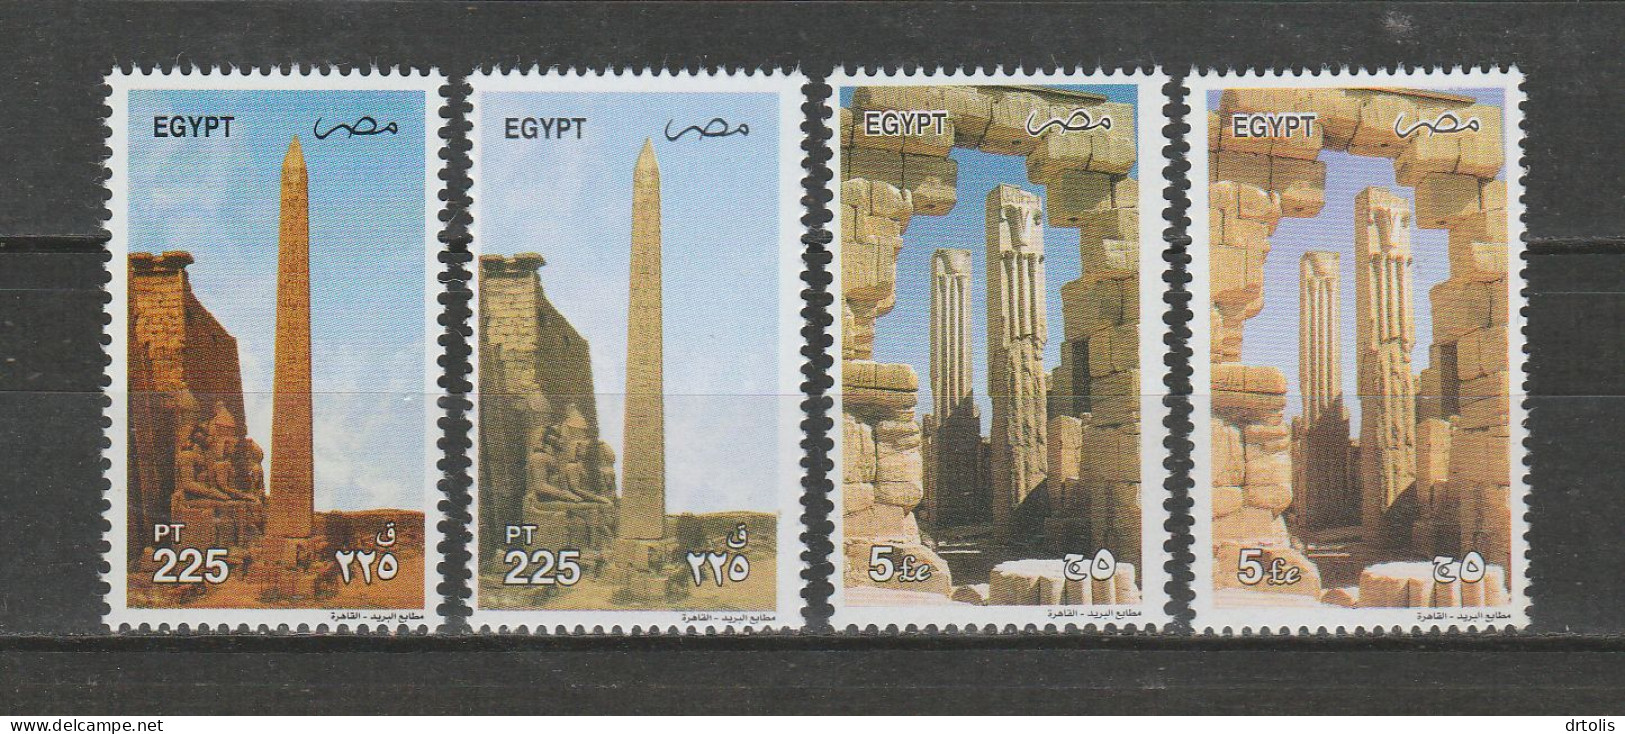 EGYPT / 2002 / THE REGULAR SET / A VERY RARE MARVELLOUS COLOR VARIETY COLLECTION / EGYPTOLOGY / ARCHEOLOGY / MNH / VF - Ungebraucht